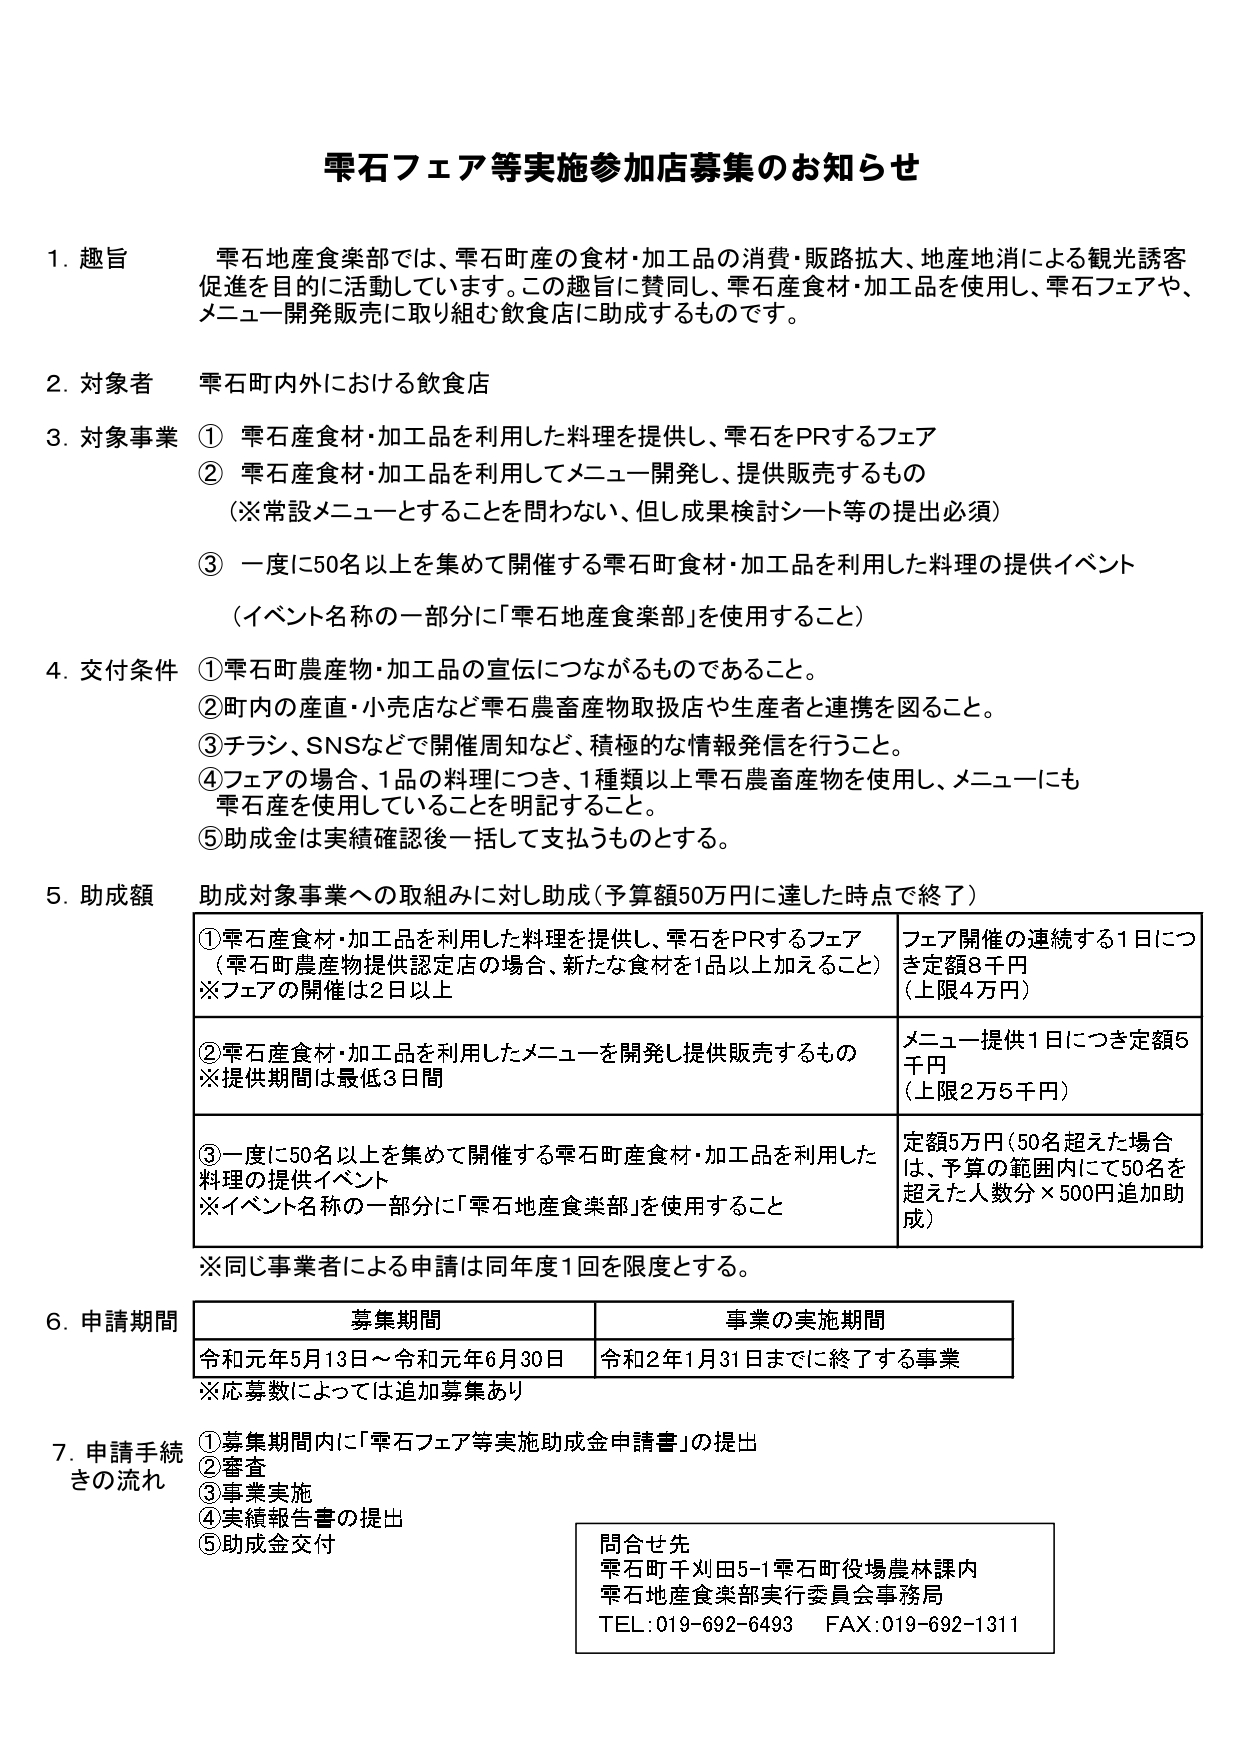 【HP】雫石フェア等実施参加店募集のお知らせ_page-0001.jpg